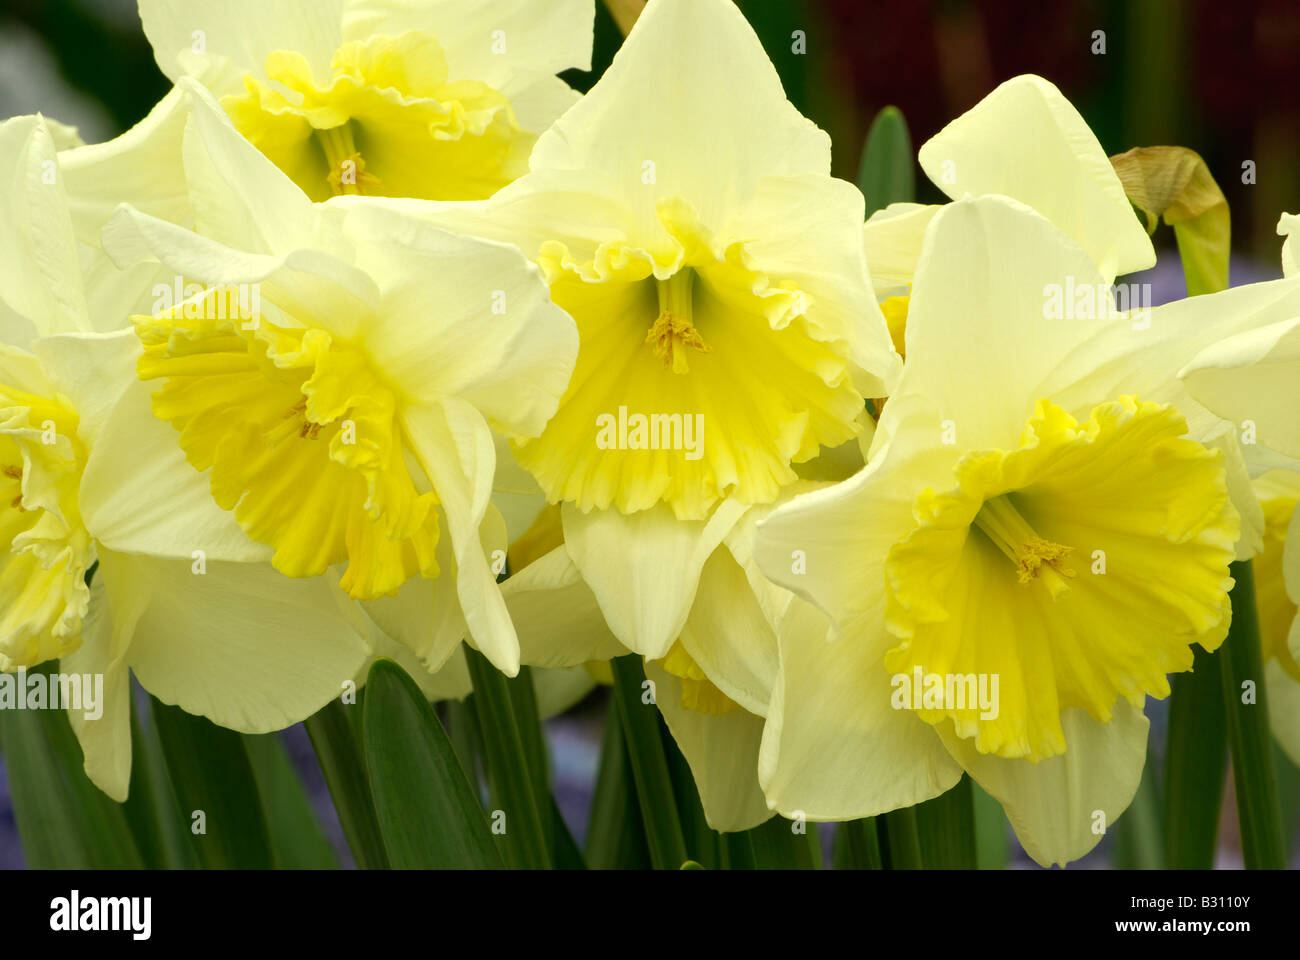 group of daffodils Stock Photo - Alamy